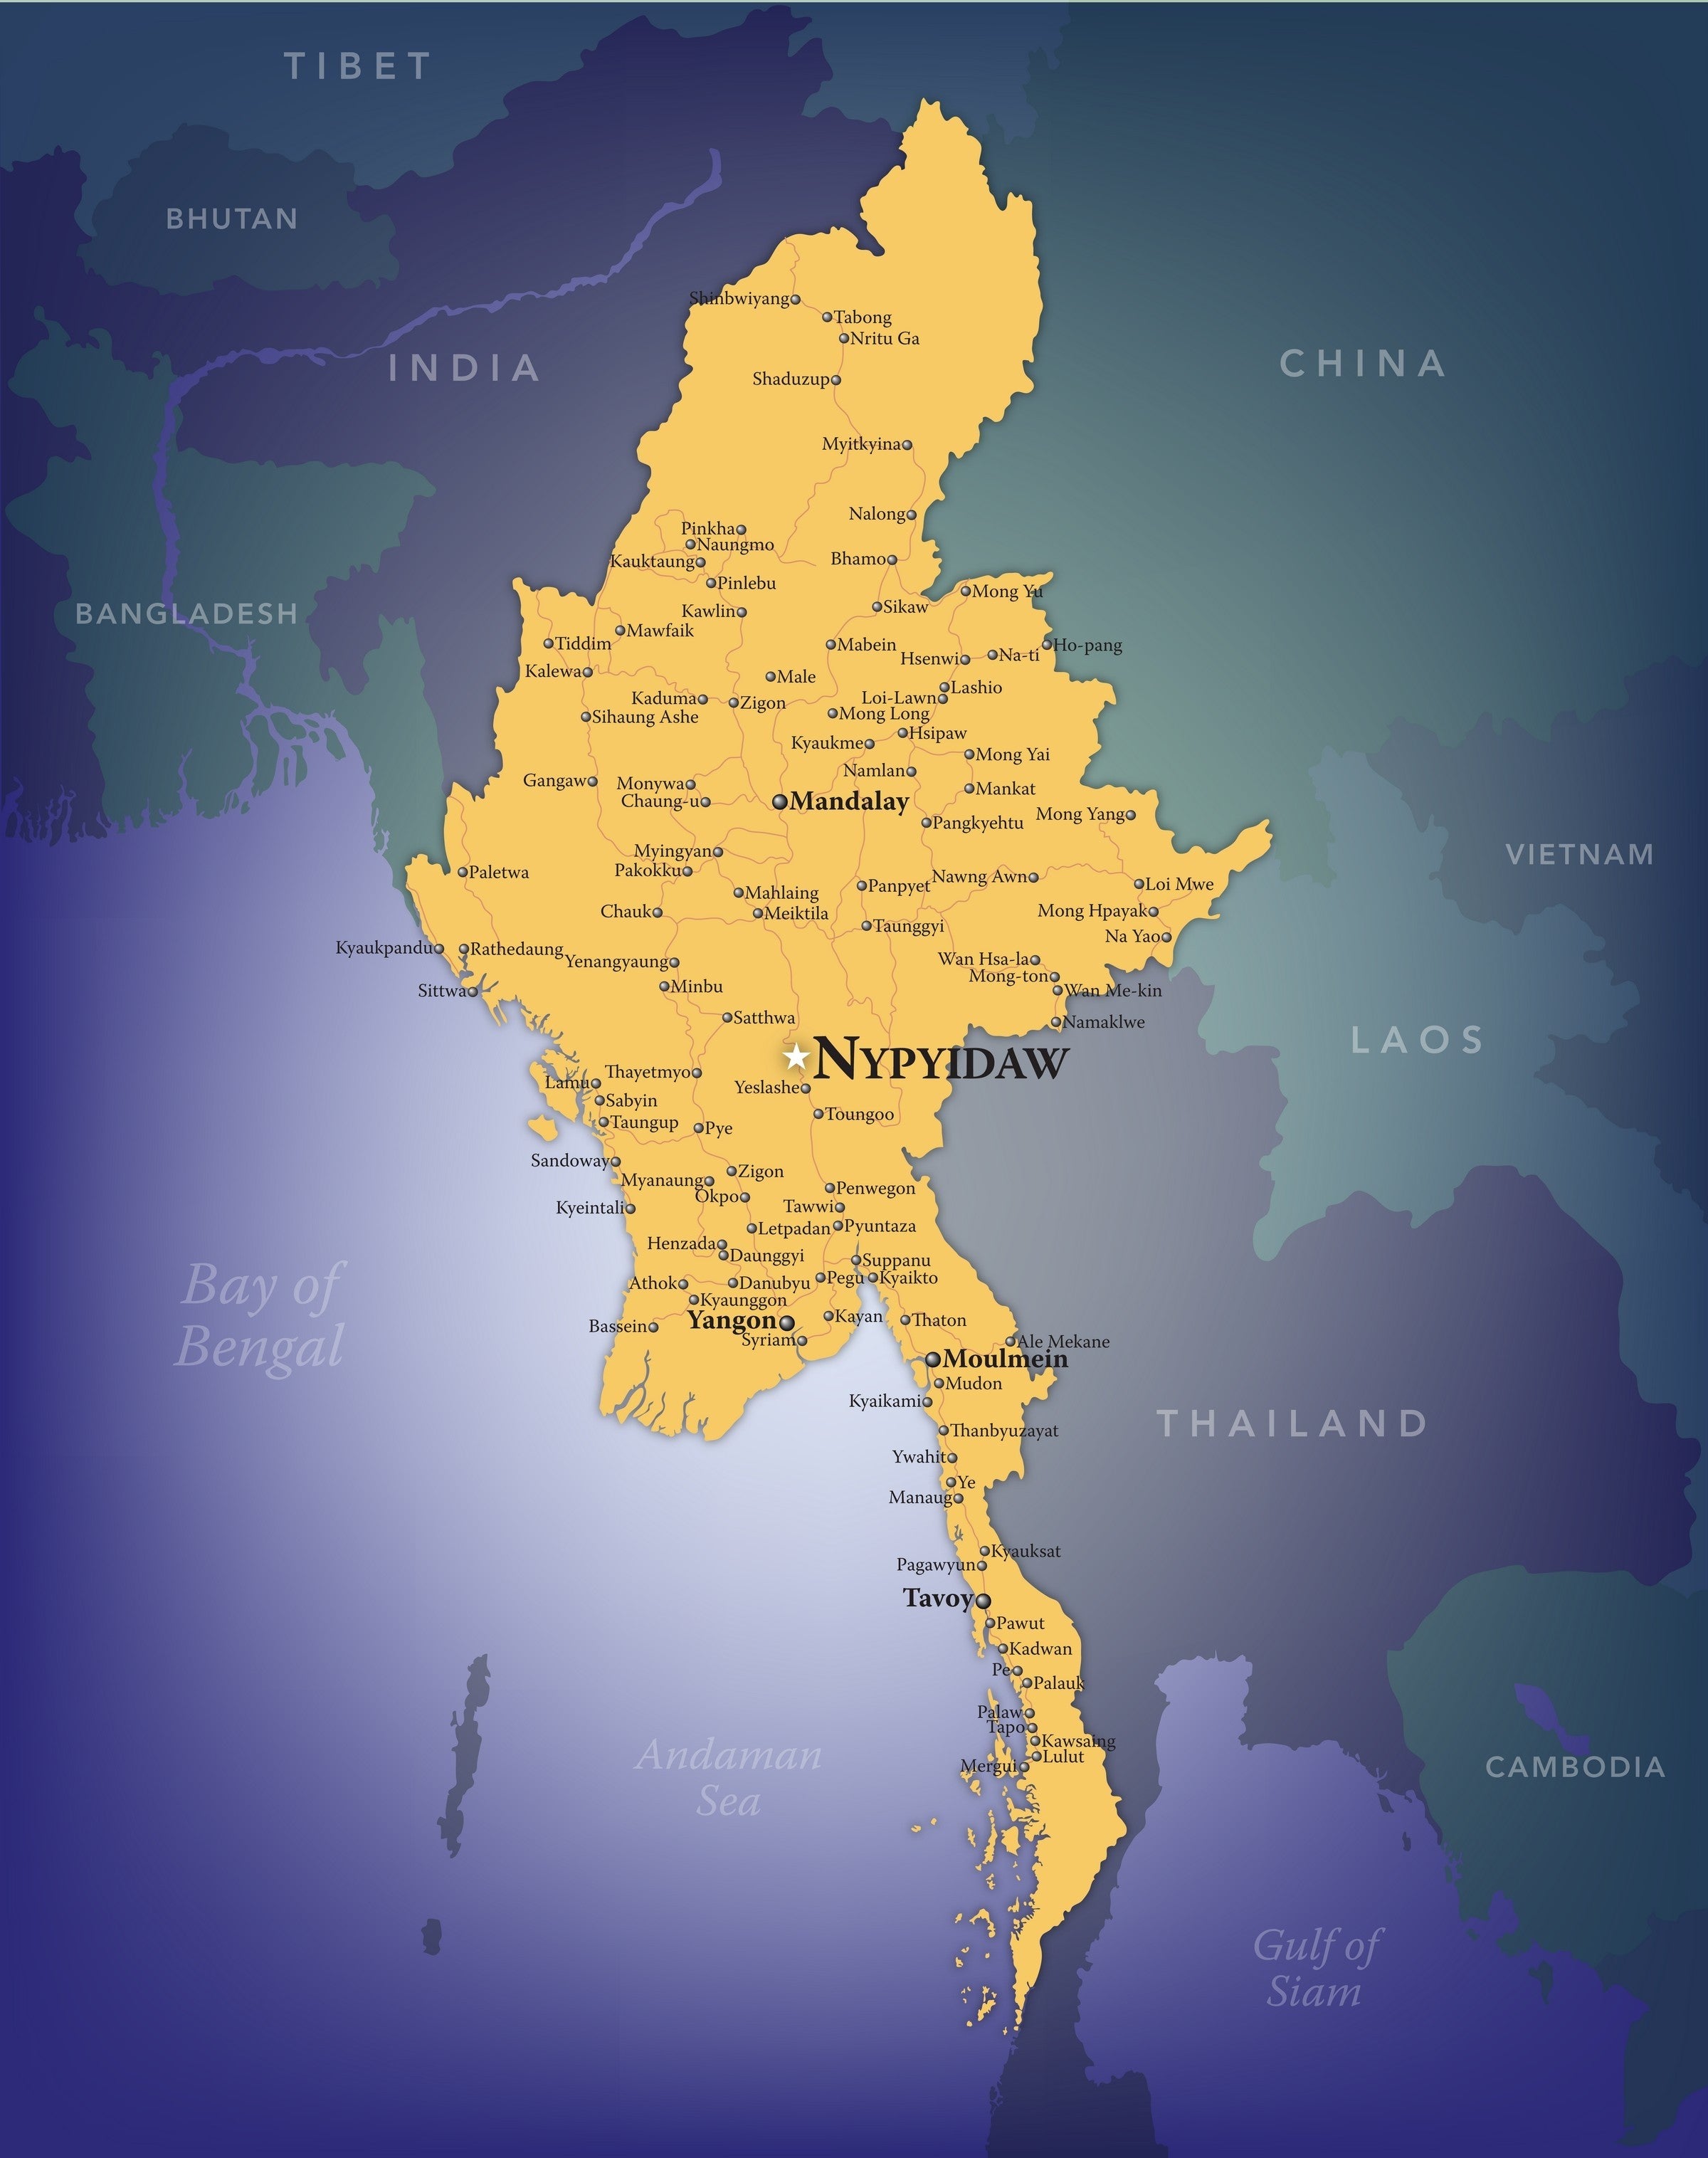 Burma (Myanmar) Wall Map | Maps.com.com